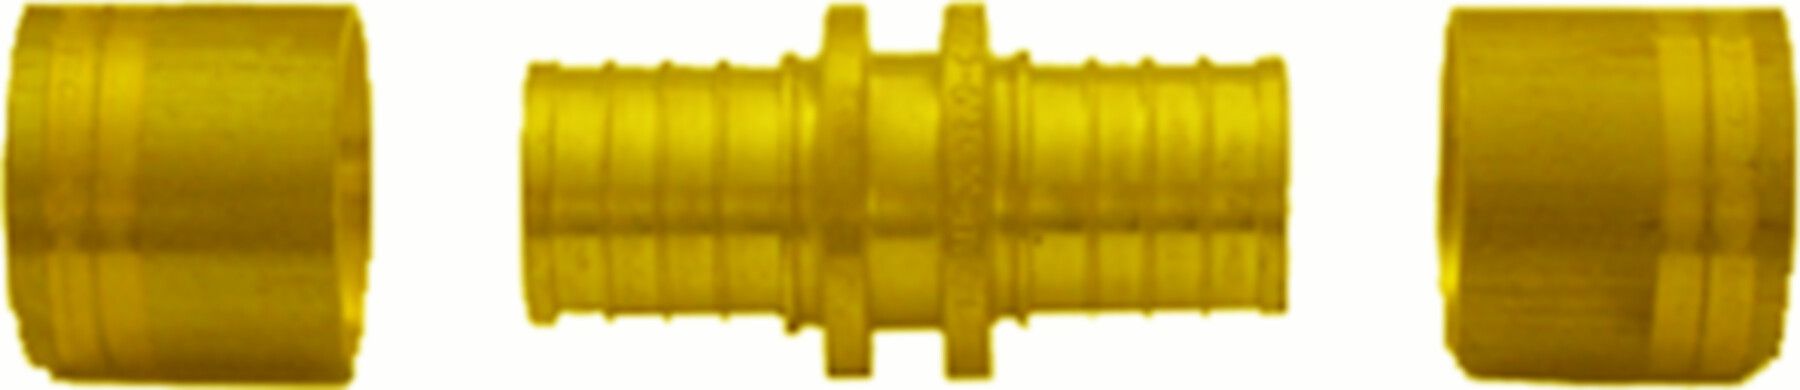 Press-Verbindungskupplung PVK H - 110 ø 110/10.0 mm - Isopex Fernwärmeleitung